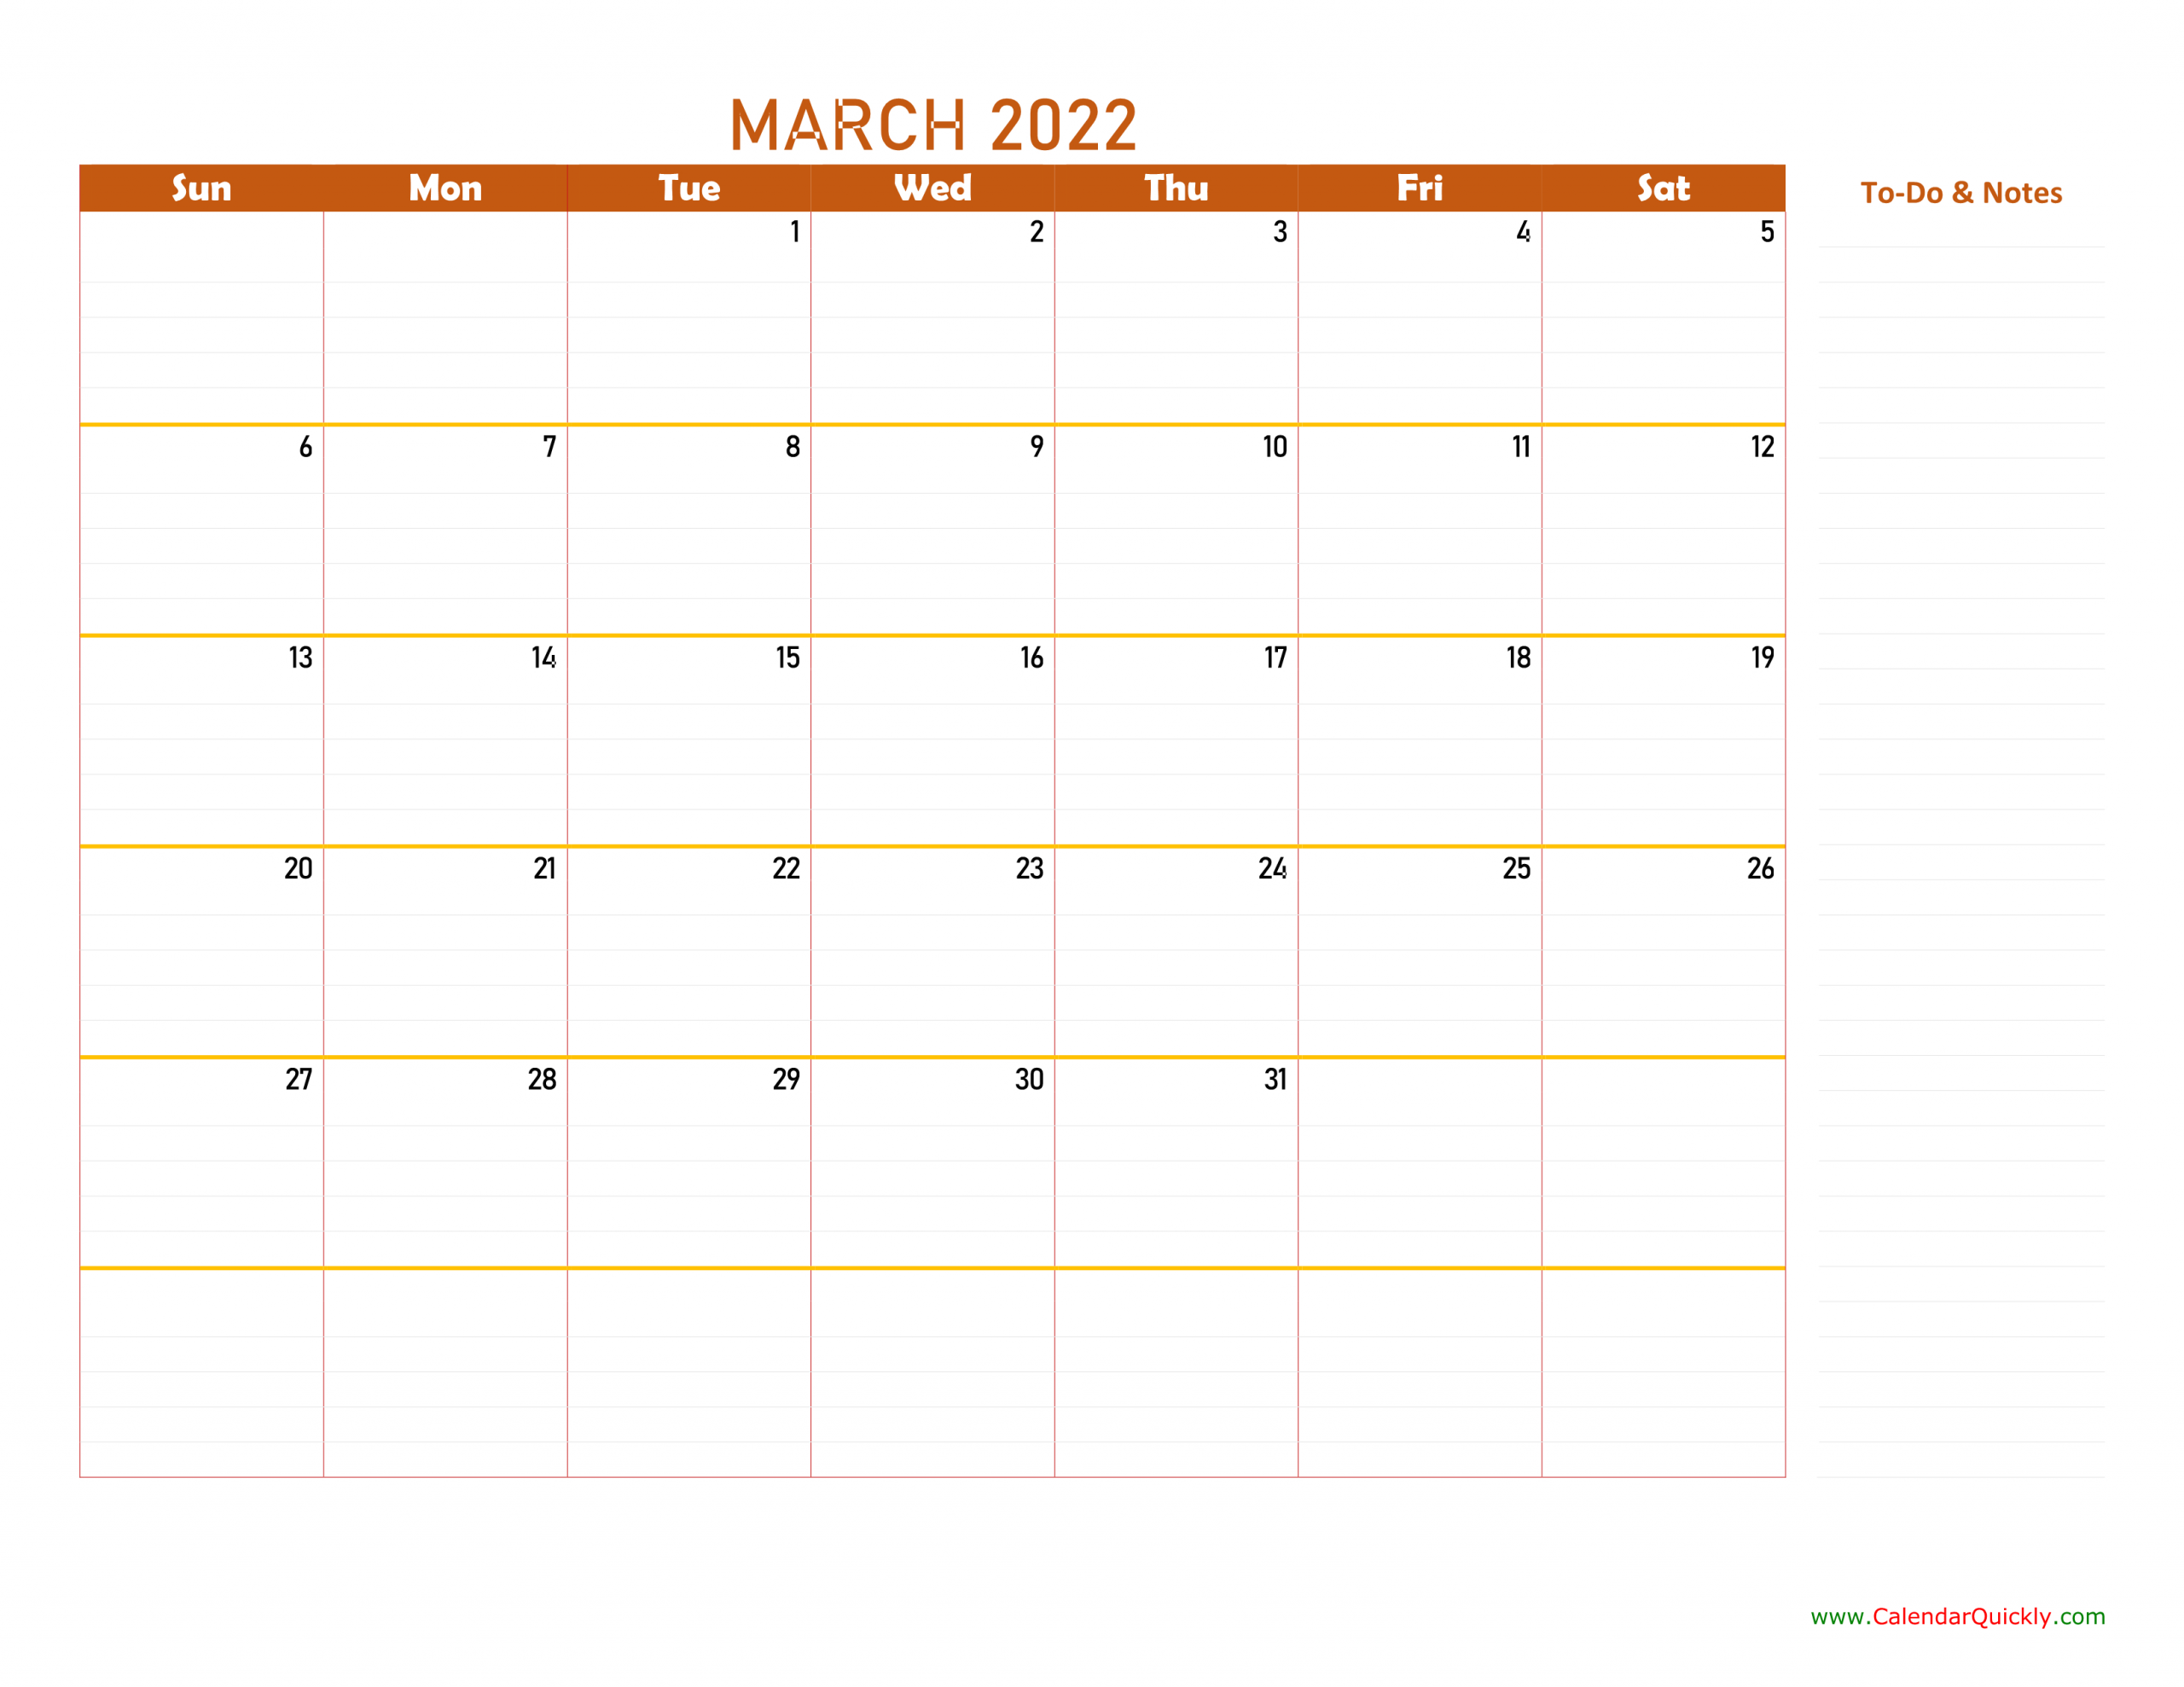 march 2022 calendar calendar quickly